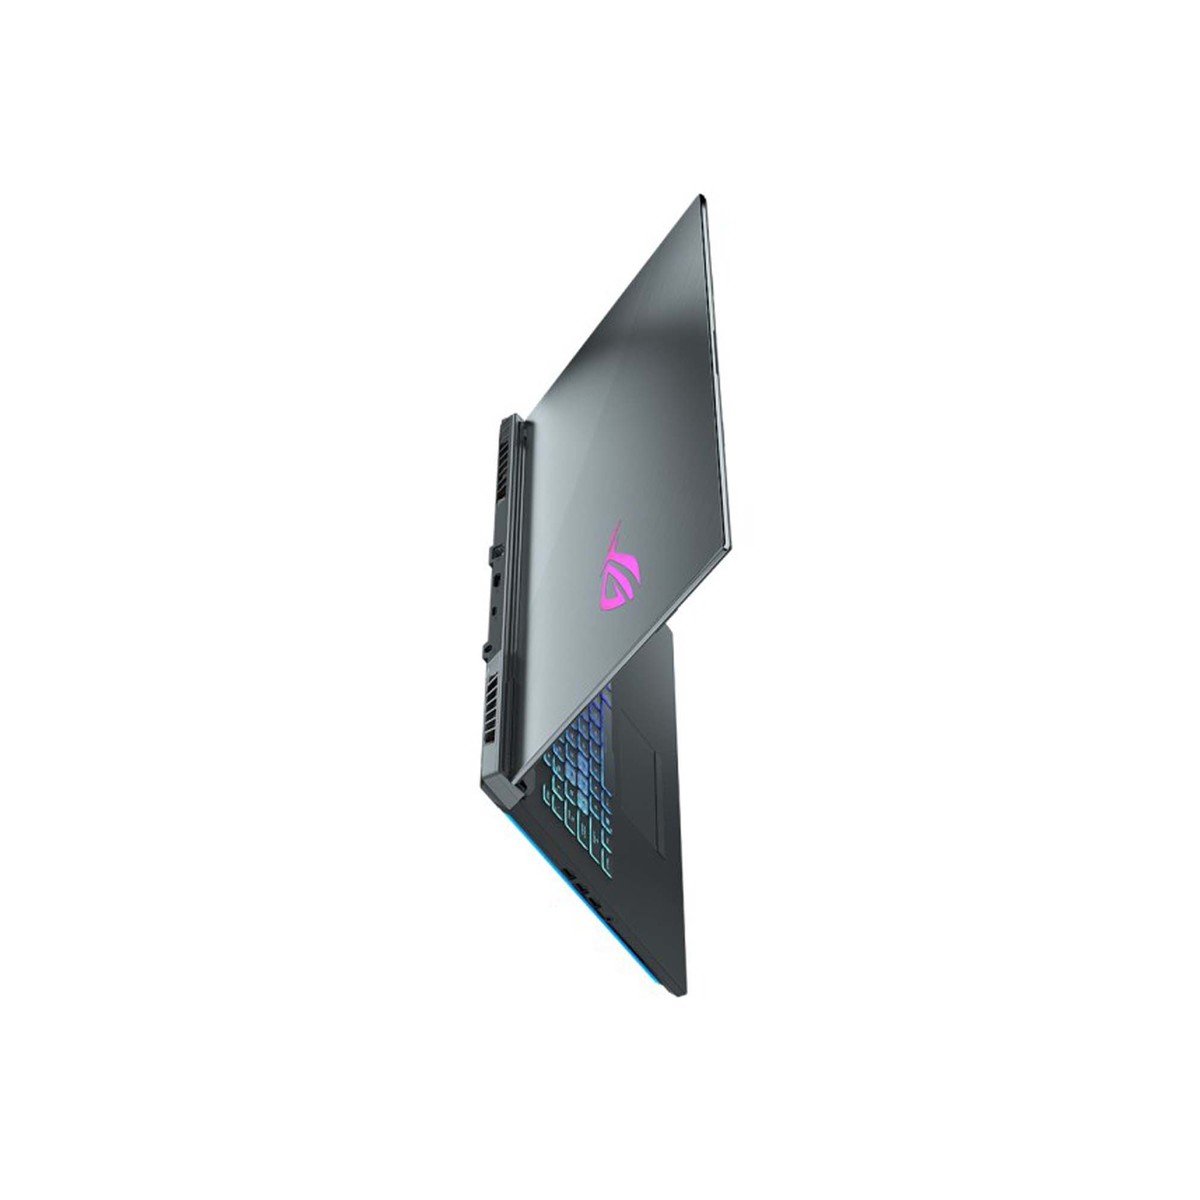 Asus G731GV-EV073T ROG STRIX SCAR III Gaming Notebook Black (Core i7, 16GB, 1TB+256GB SSD, 17.3" FHD, GeForce RTX 2060 6GB, Windows 10)